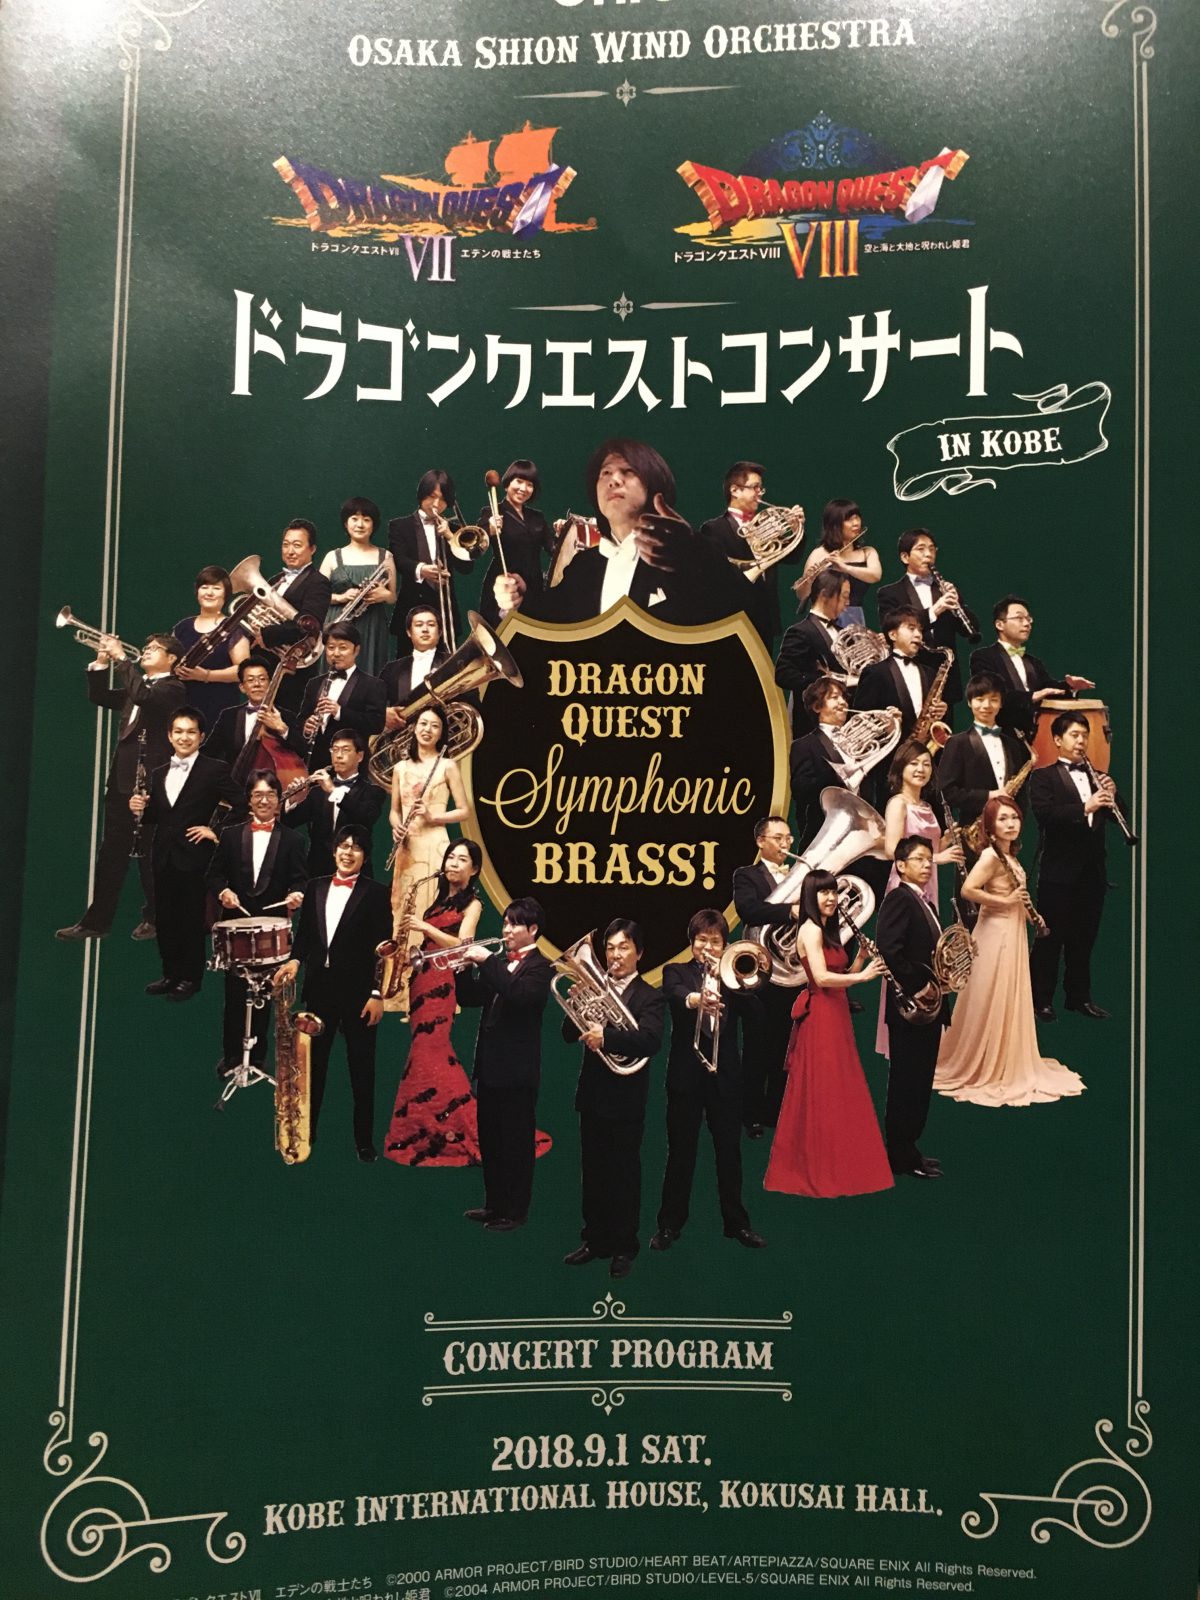 Osaka Shion Wind Orchestra ドラゴンクエストコンサート ドラクエ7 8 In 神戸 参加レポート Mnaの世界